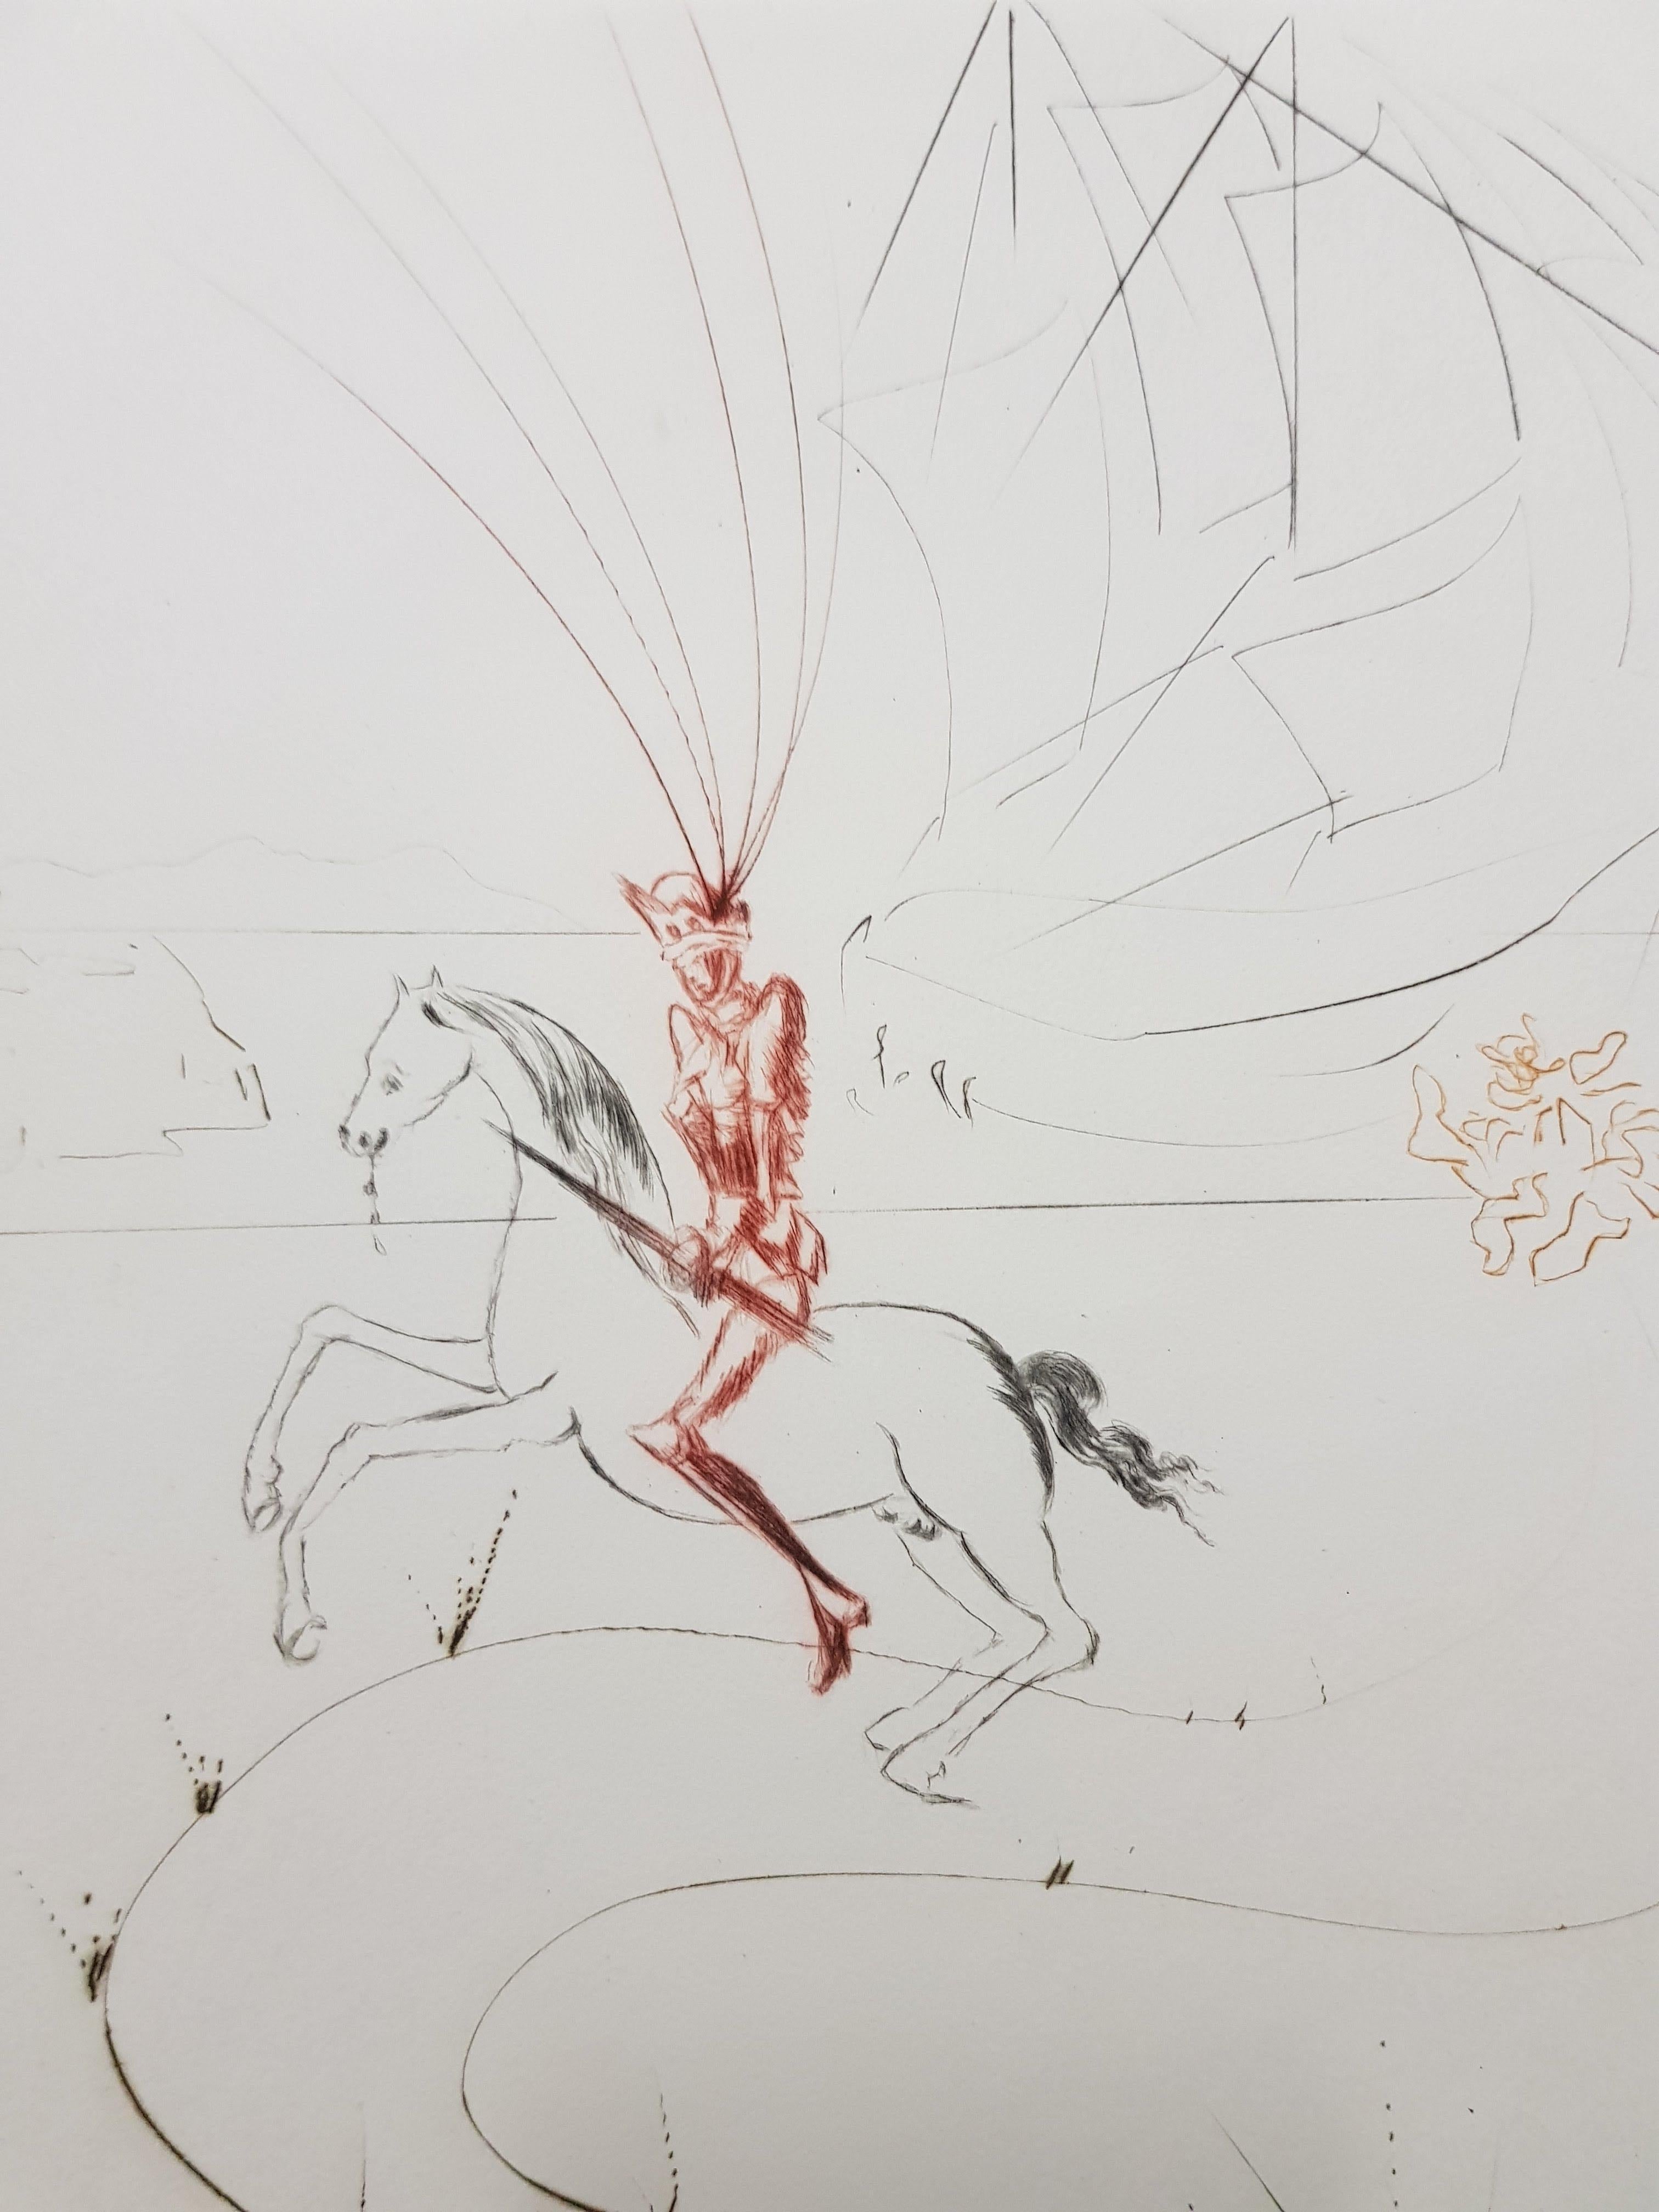 Salvador Dali - Tristan’s Last Fight - Original Etching - Surrealist Print by Salvador Dalí